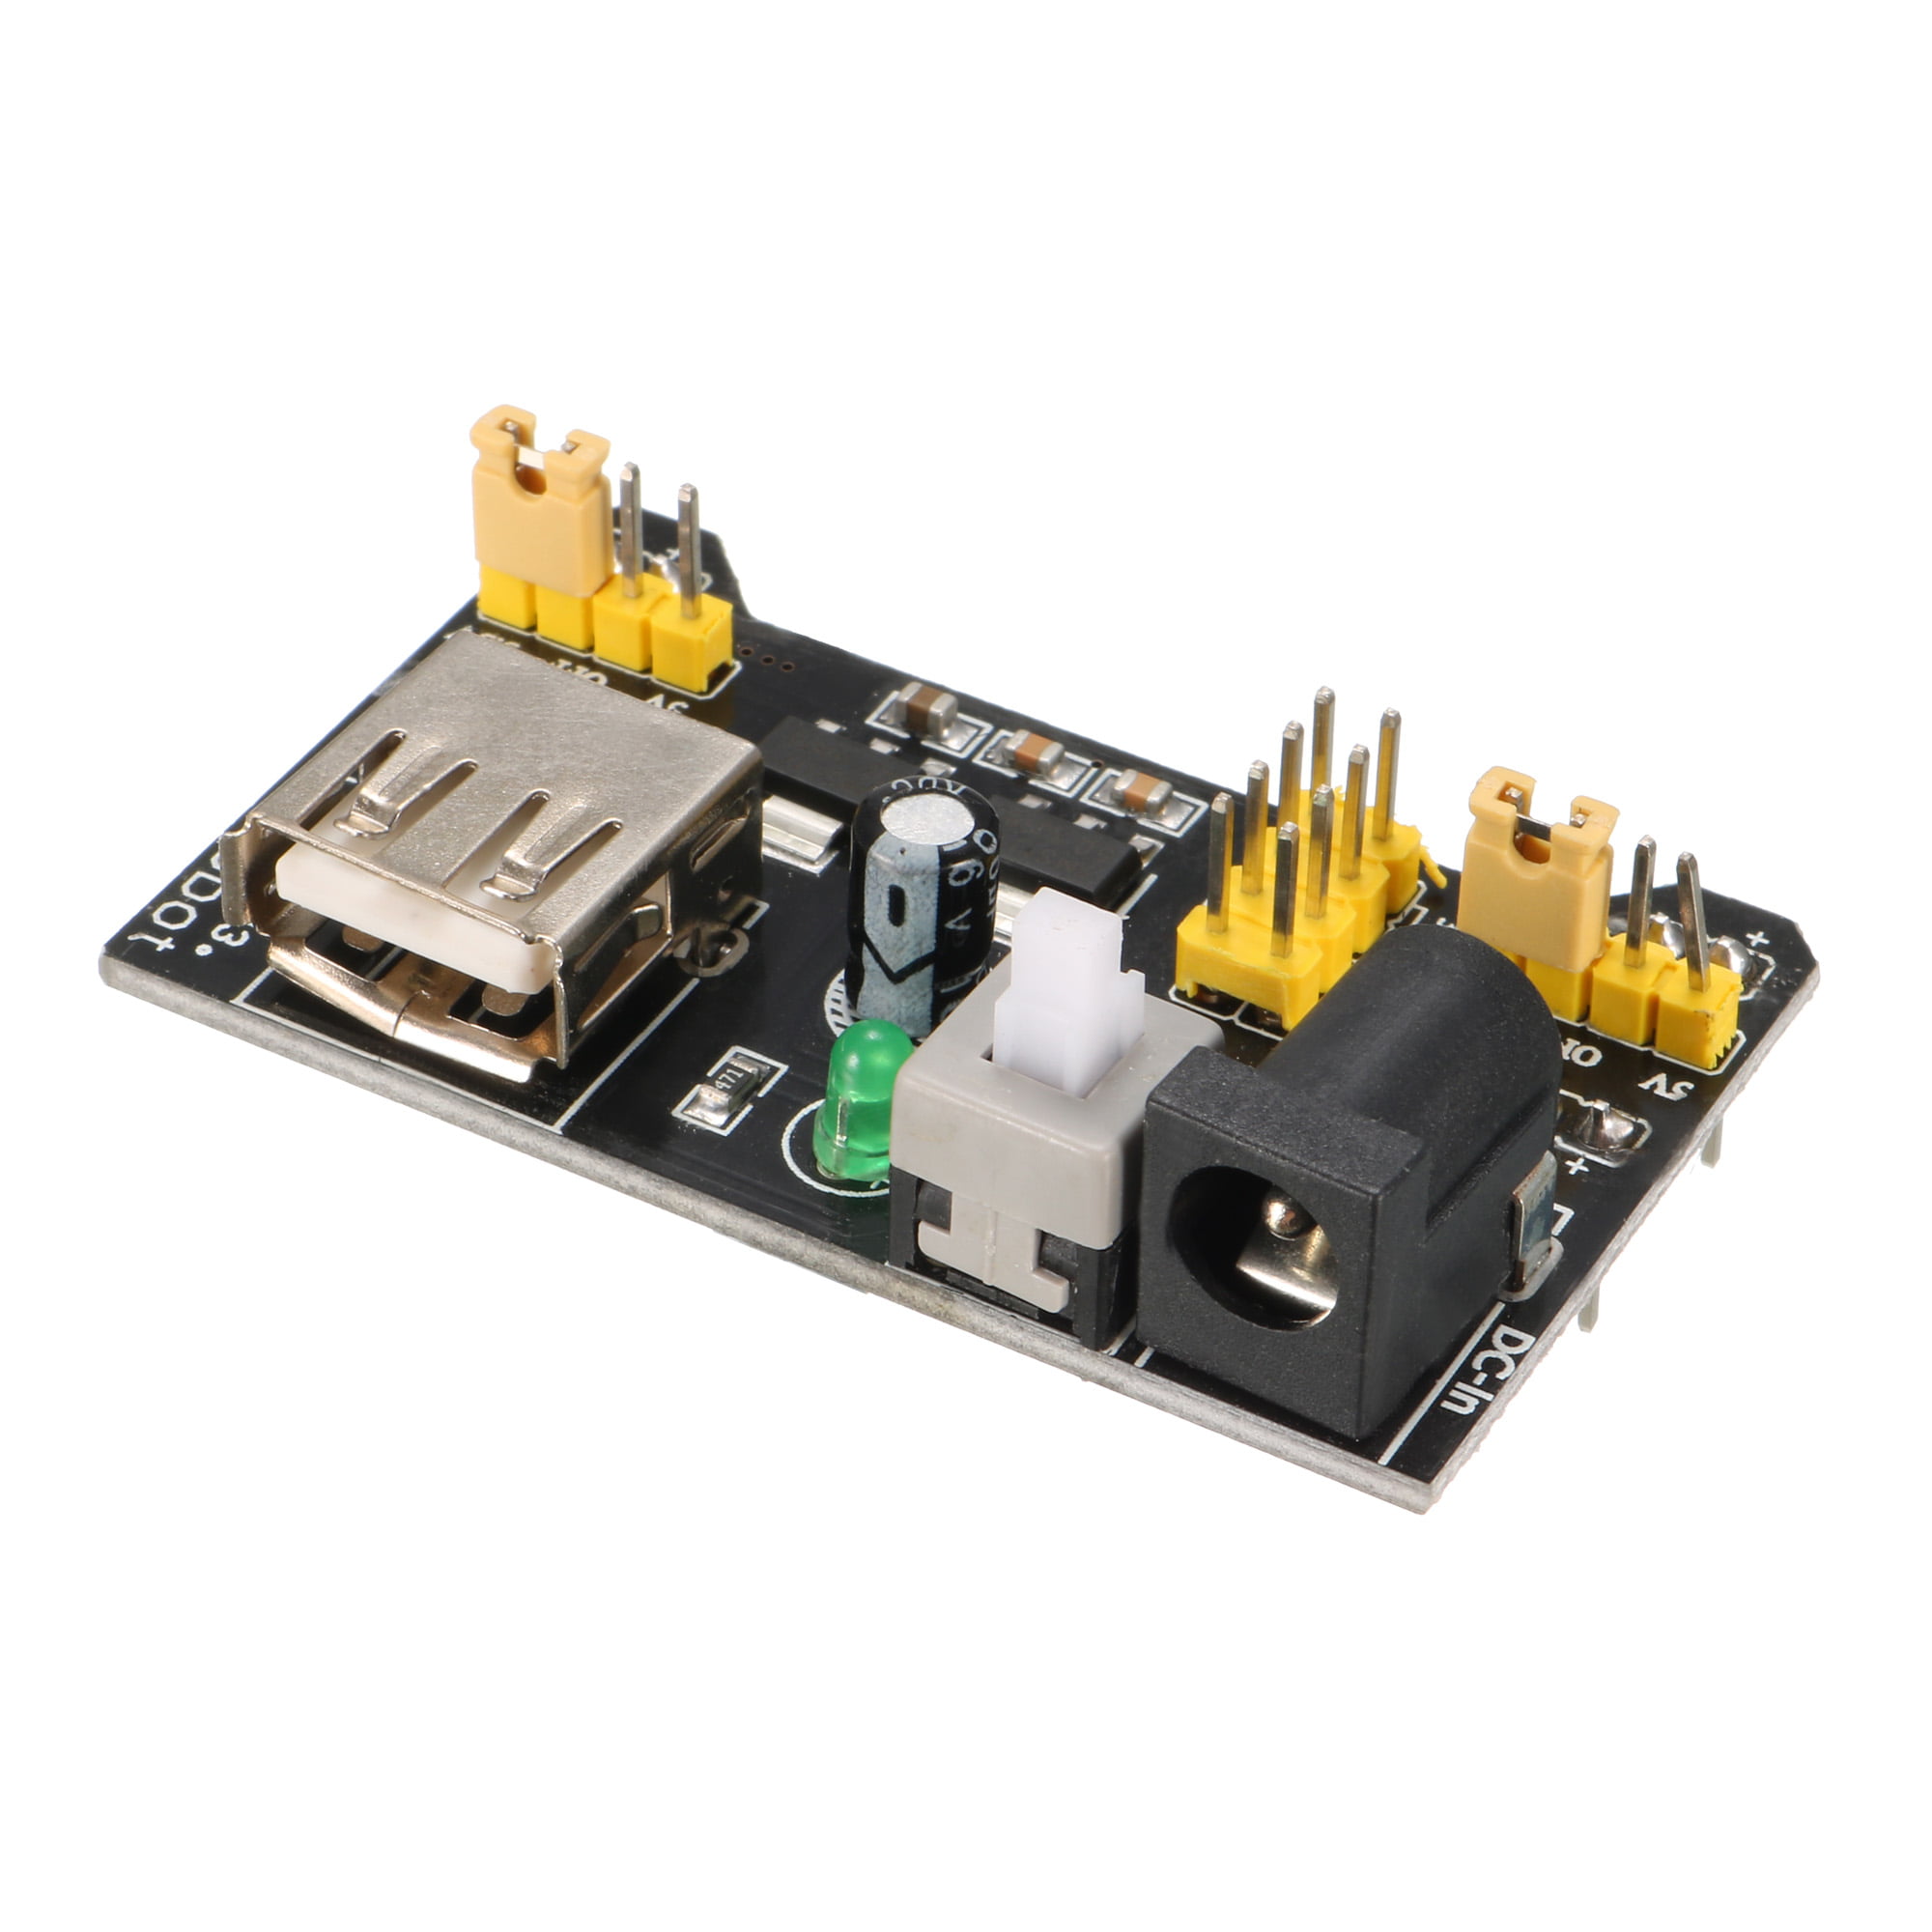 3.3V/5V 1Pcs Power Supply Breadboard Module MB102 Board pour Arduino IC Nouveau BR 